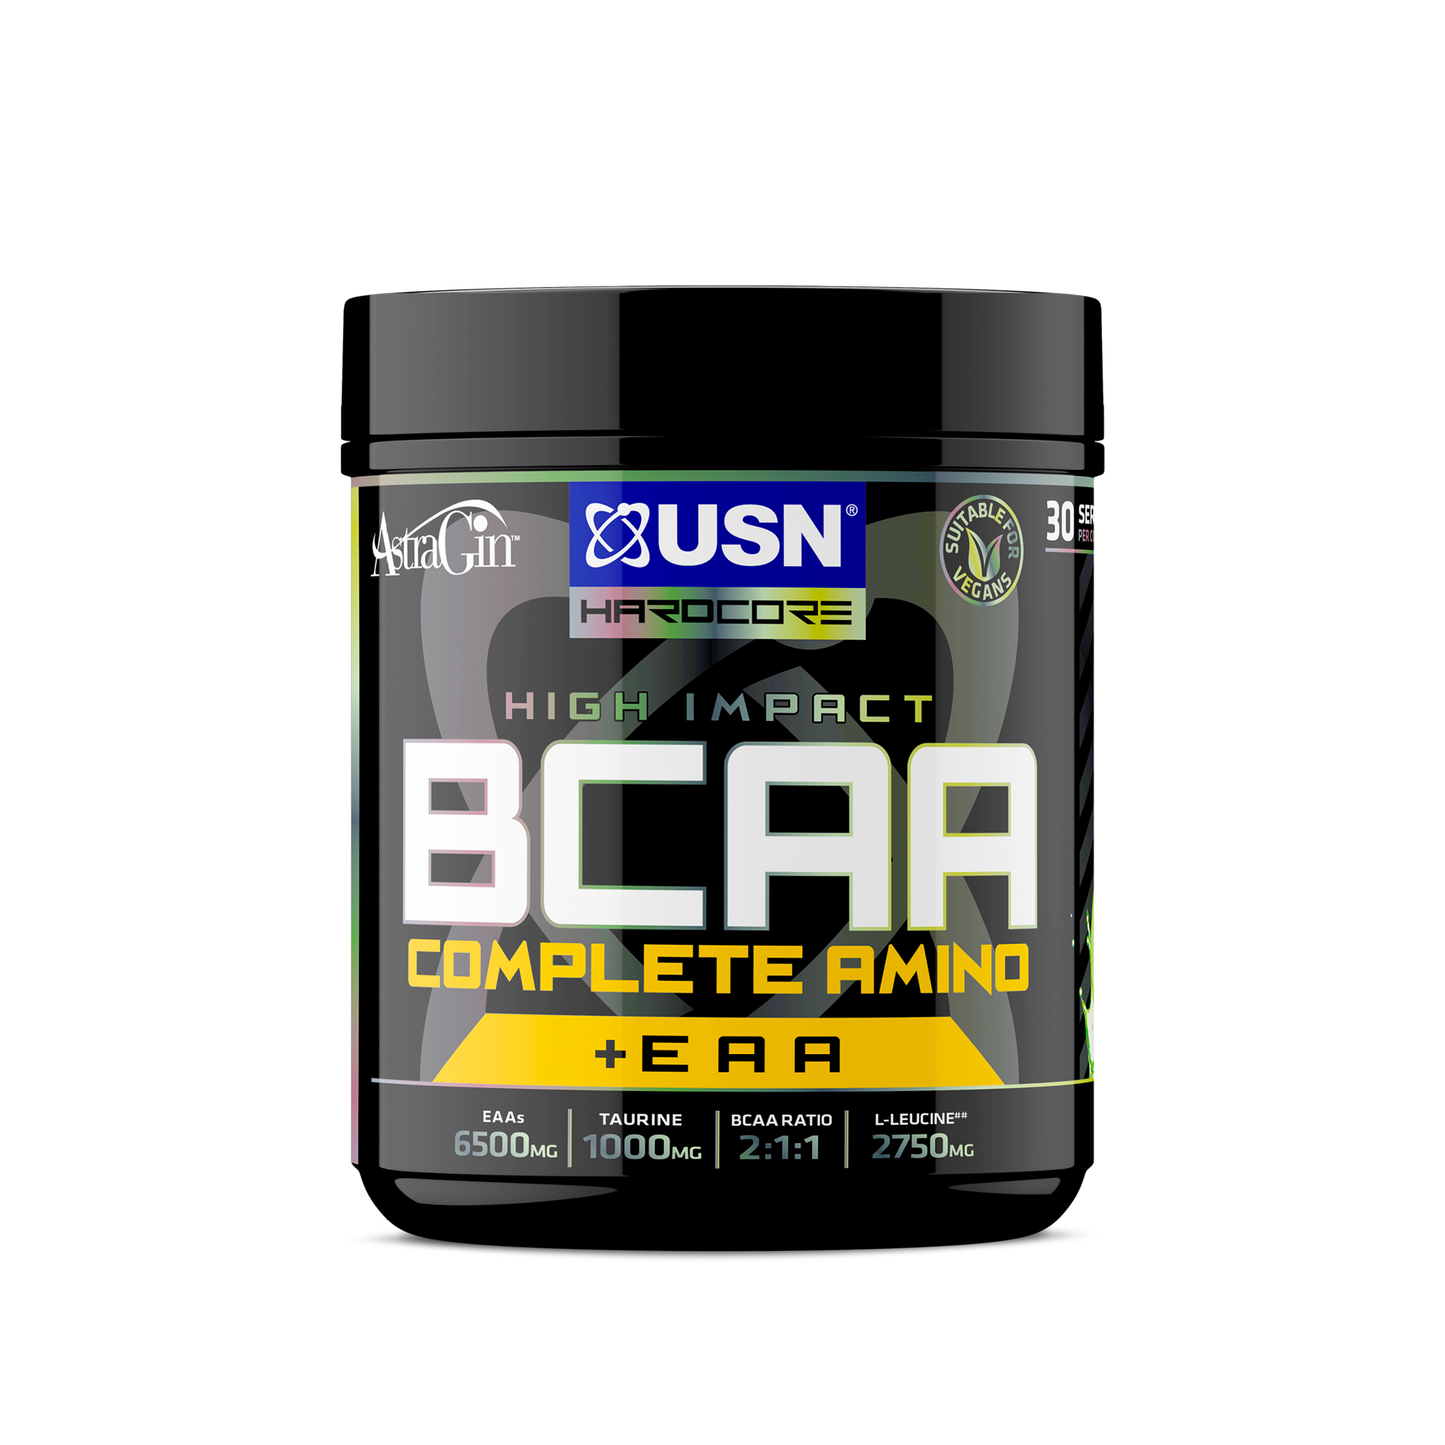 Complete Amino BCAA + EAA Energy Drink